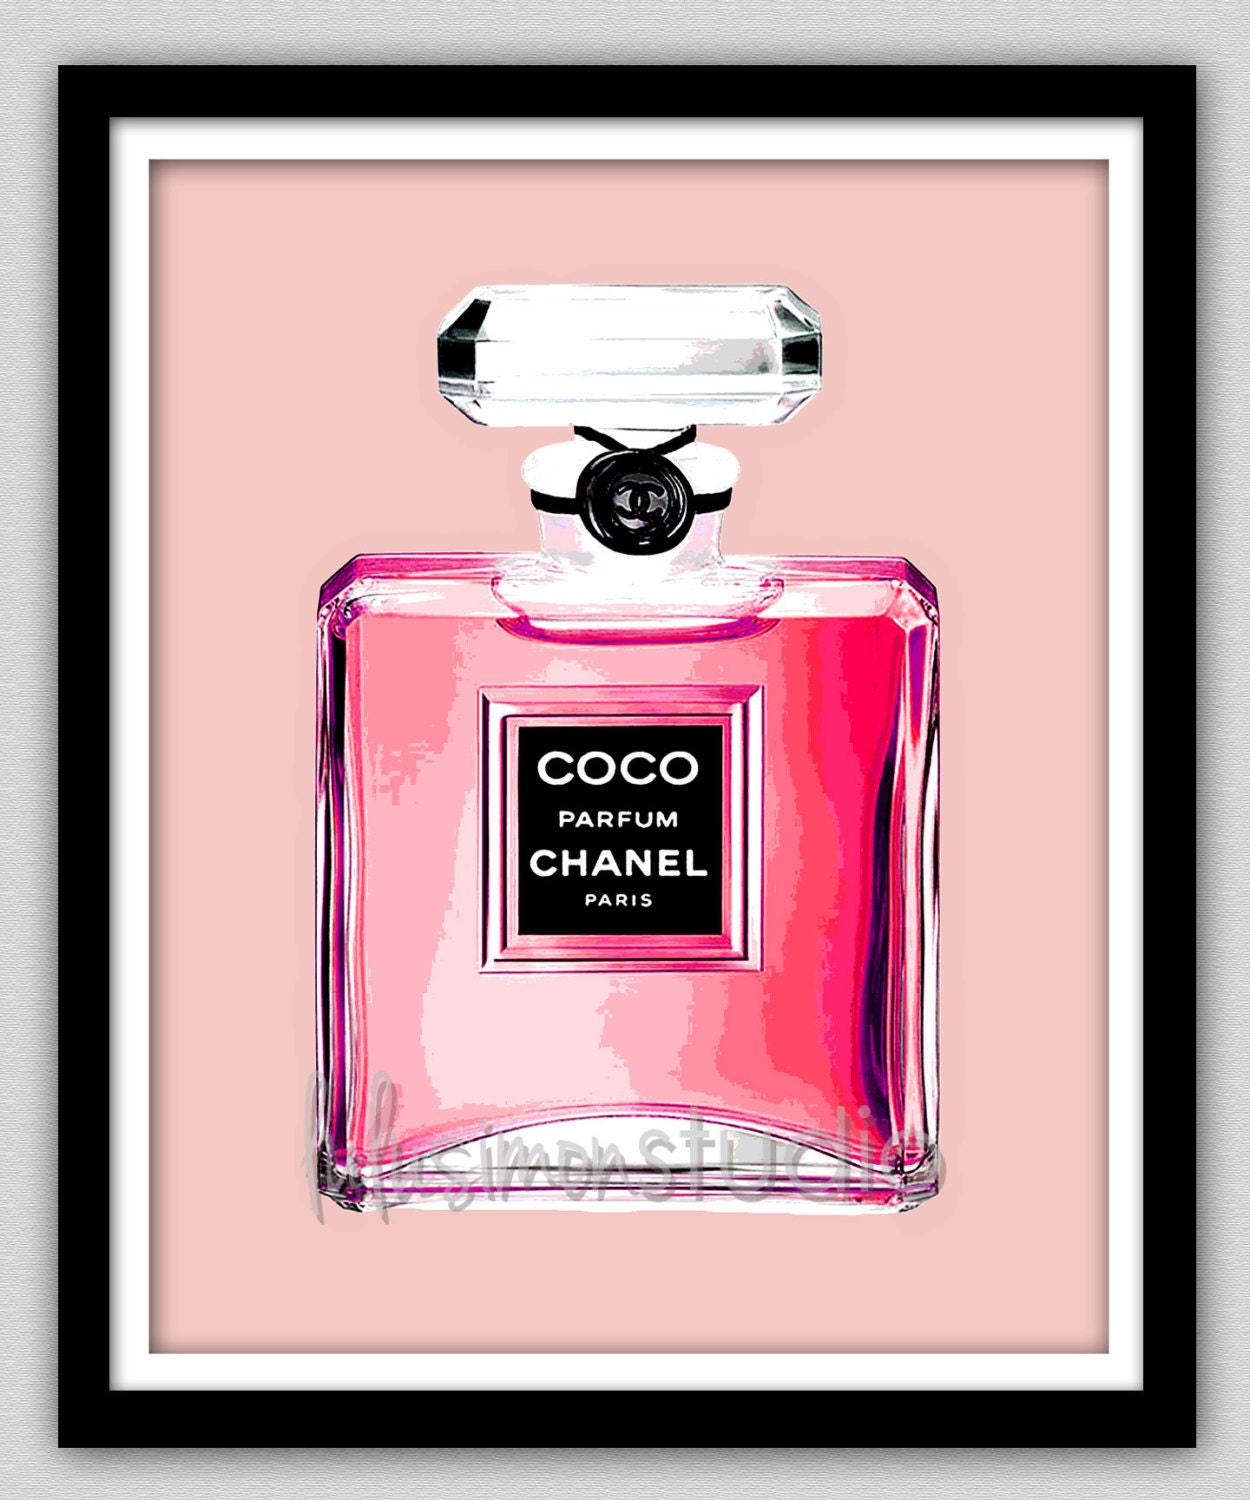 Wall Decor - Chanel - Chanel Print - Modern Home Decor - Chanel Perfume - Home Decor - Chanel Wall Art - COCO Chanel